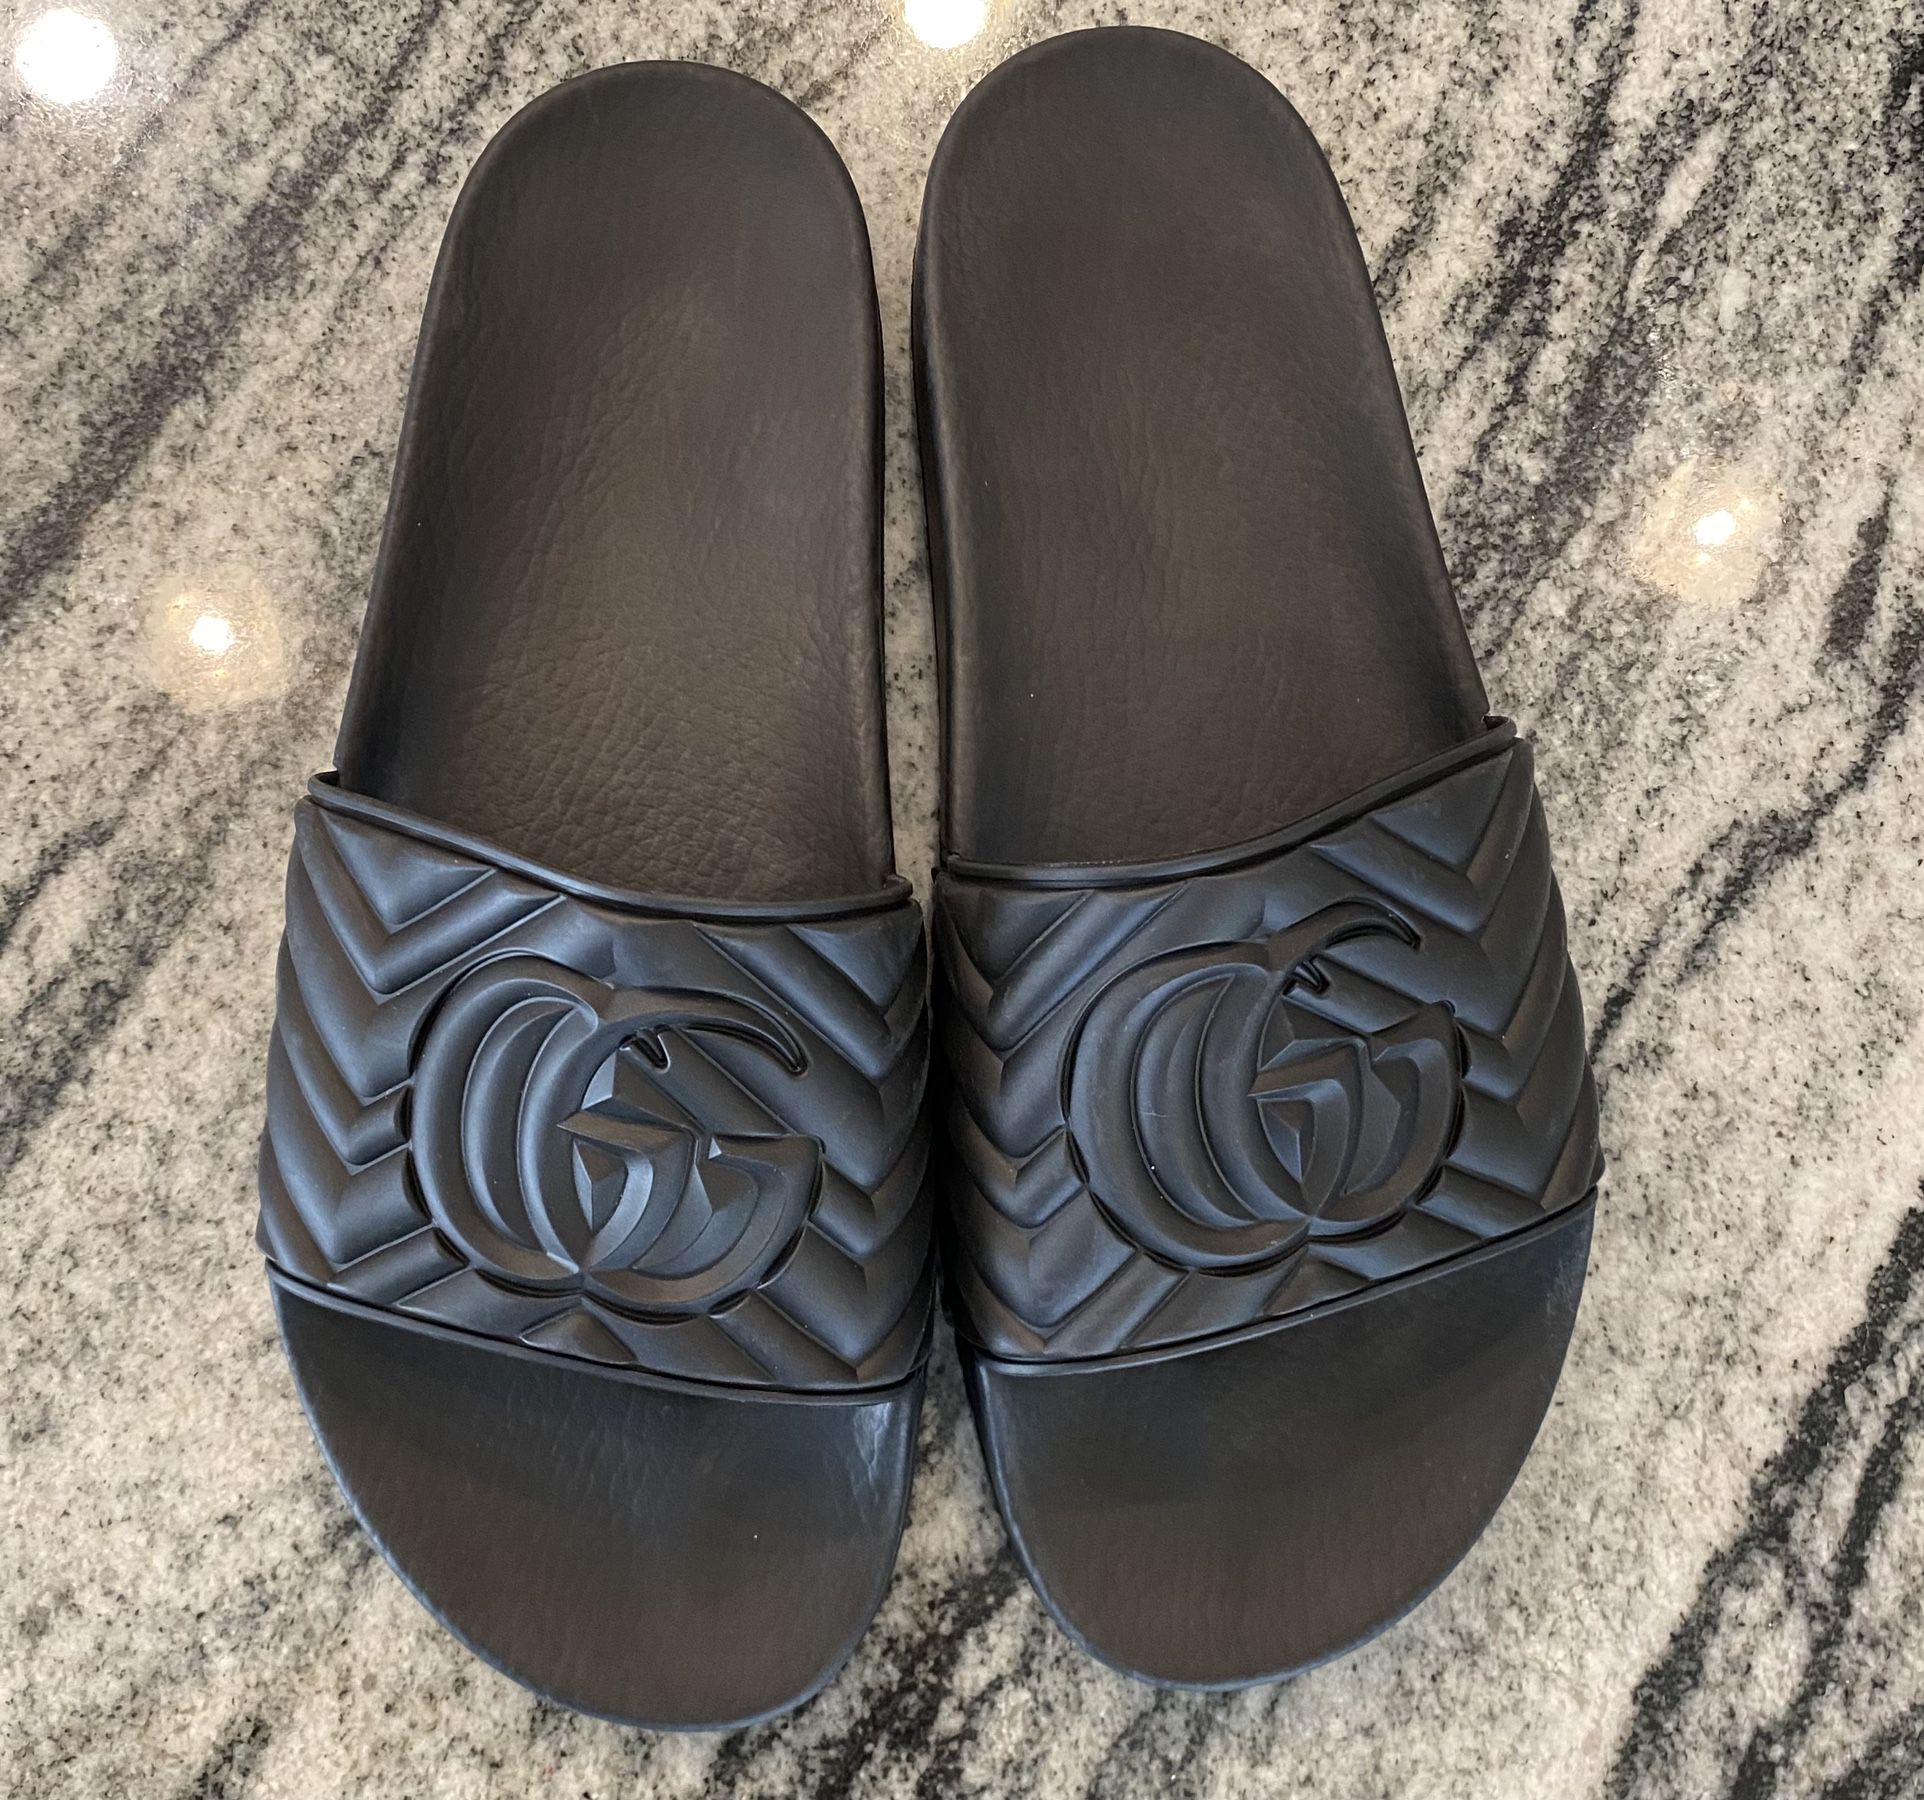 Gucci Slide Sandals